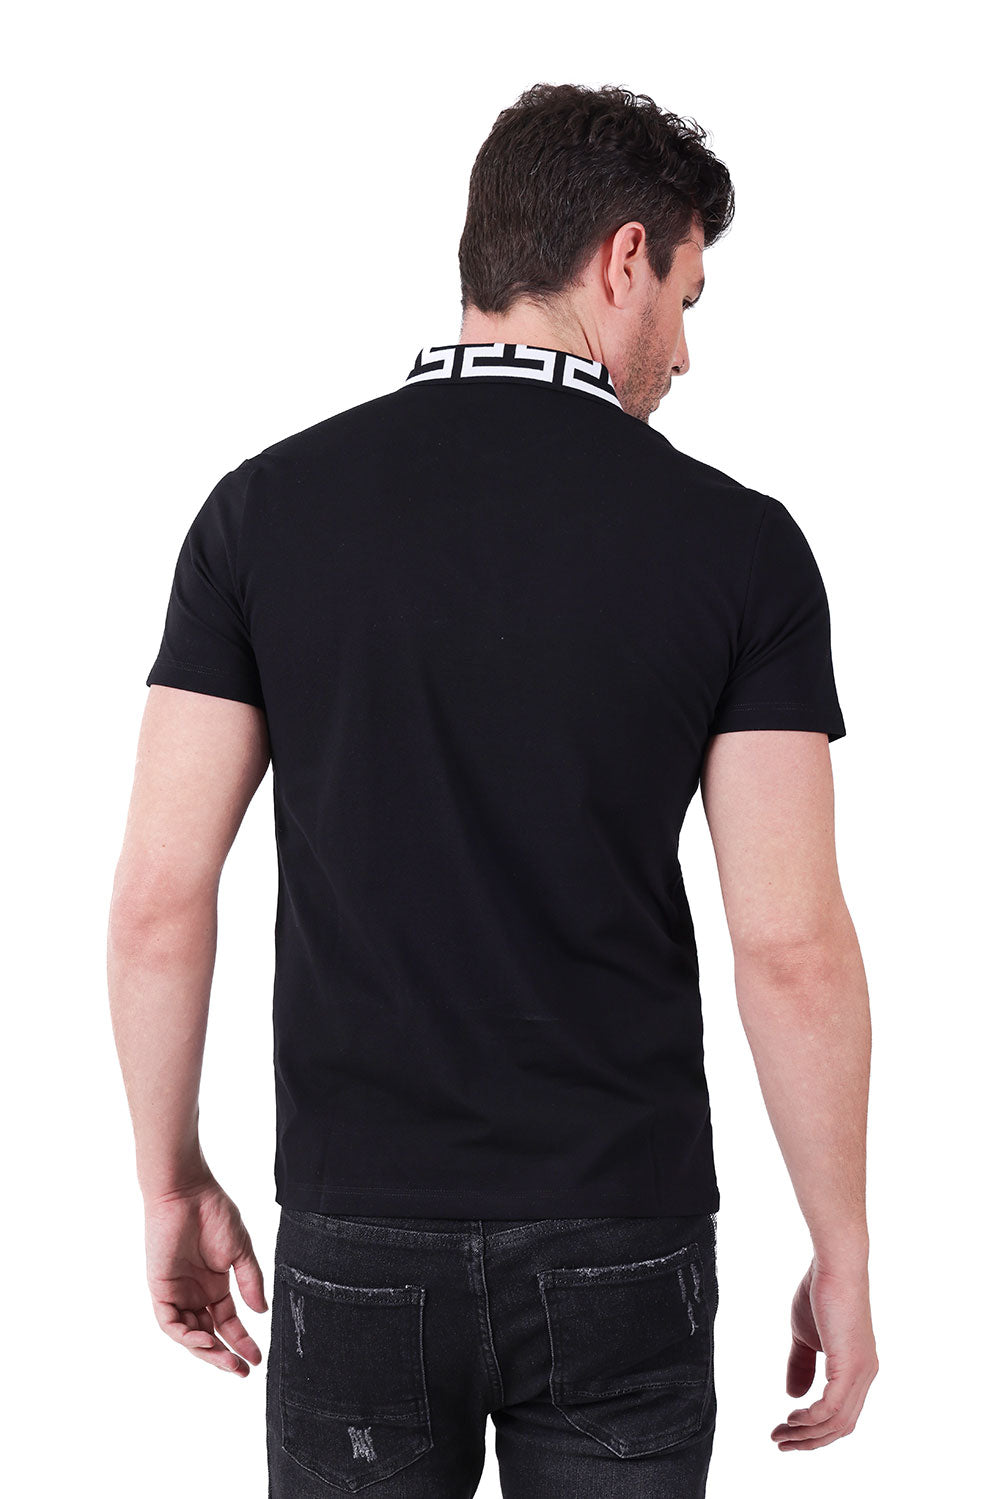 Barabas Men's Greek Key Printed Pattern Designer Polo Shirts PS121 Black White